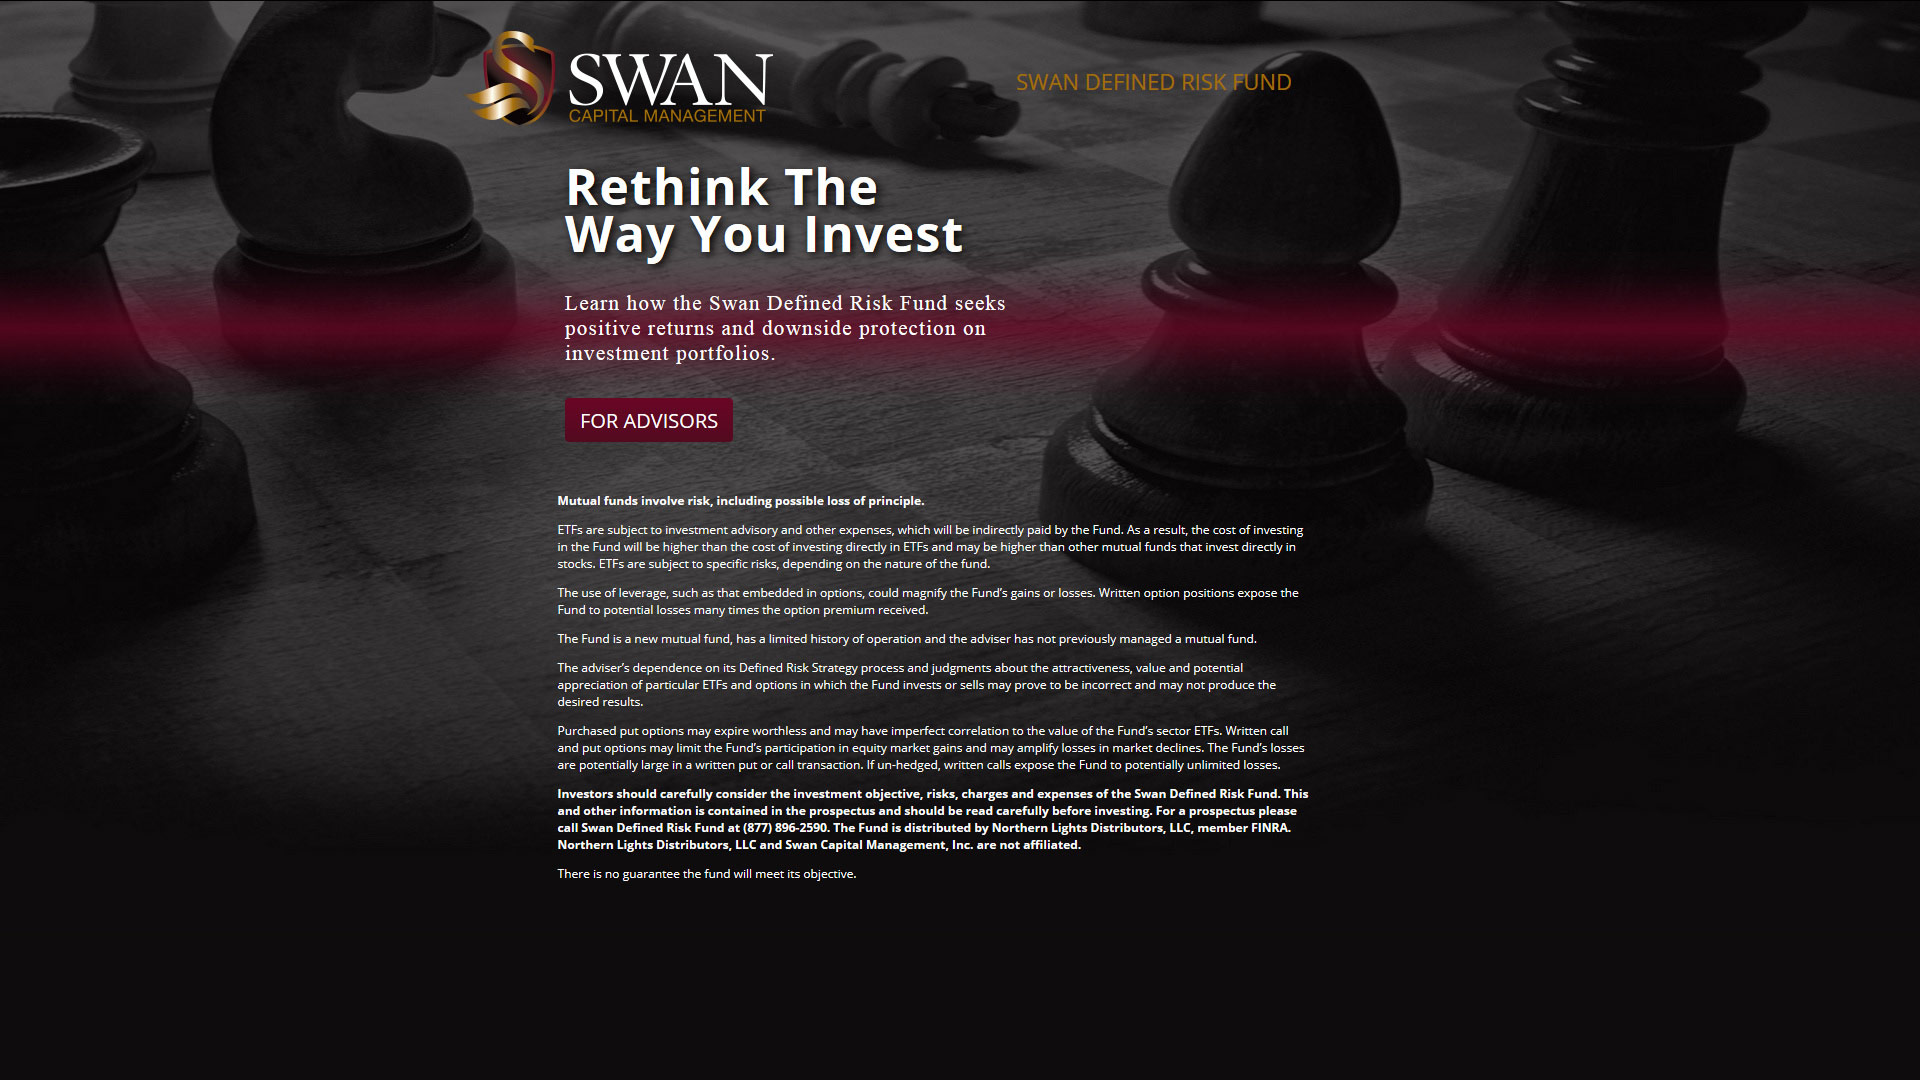 Swan Capital Management